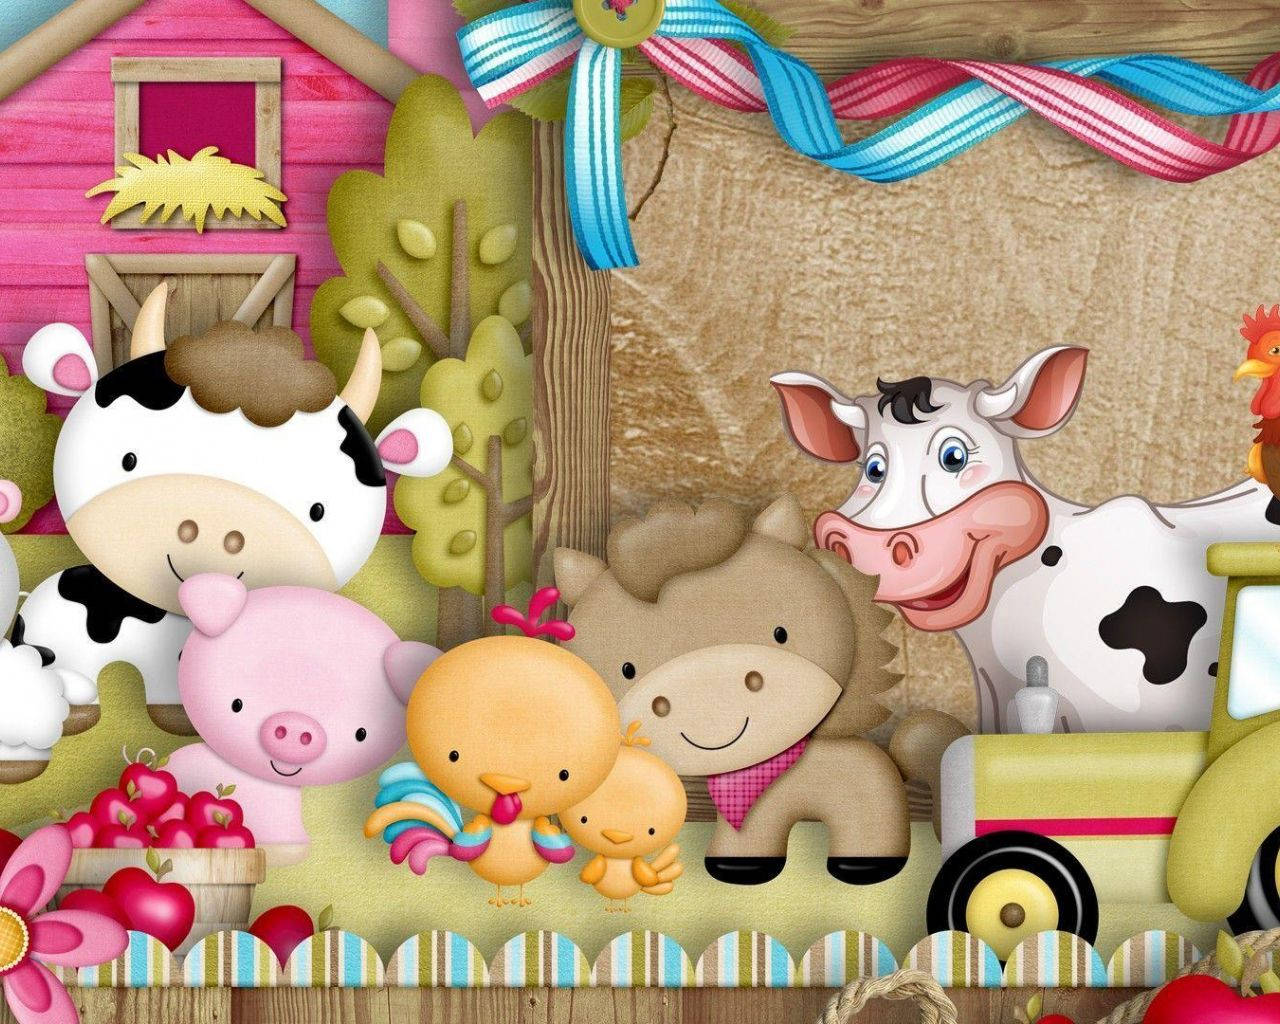 Cute Art Of A Farm Animal Geared For Children Wallpaper